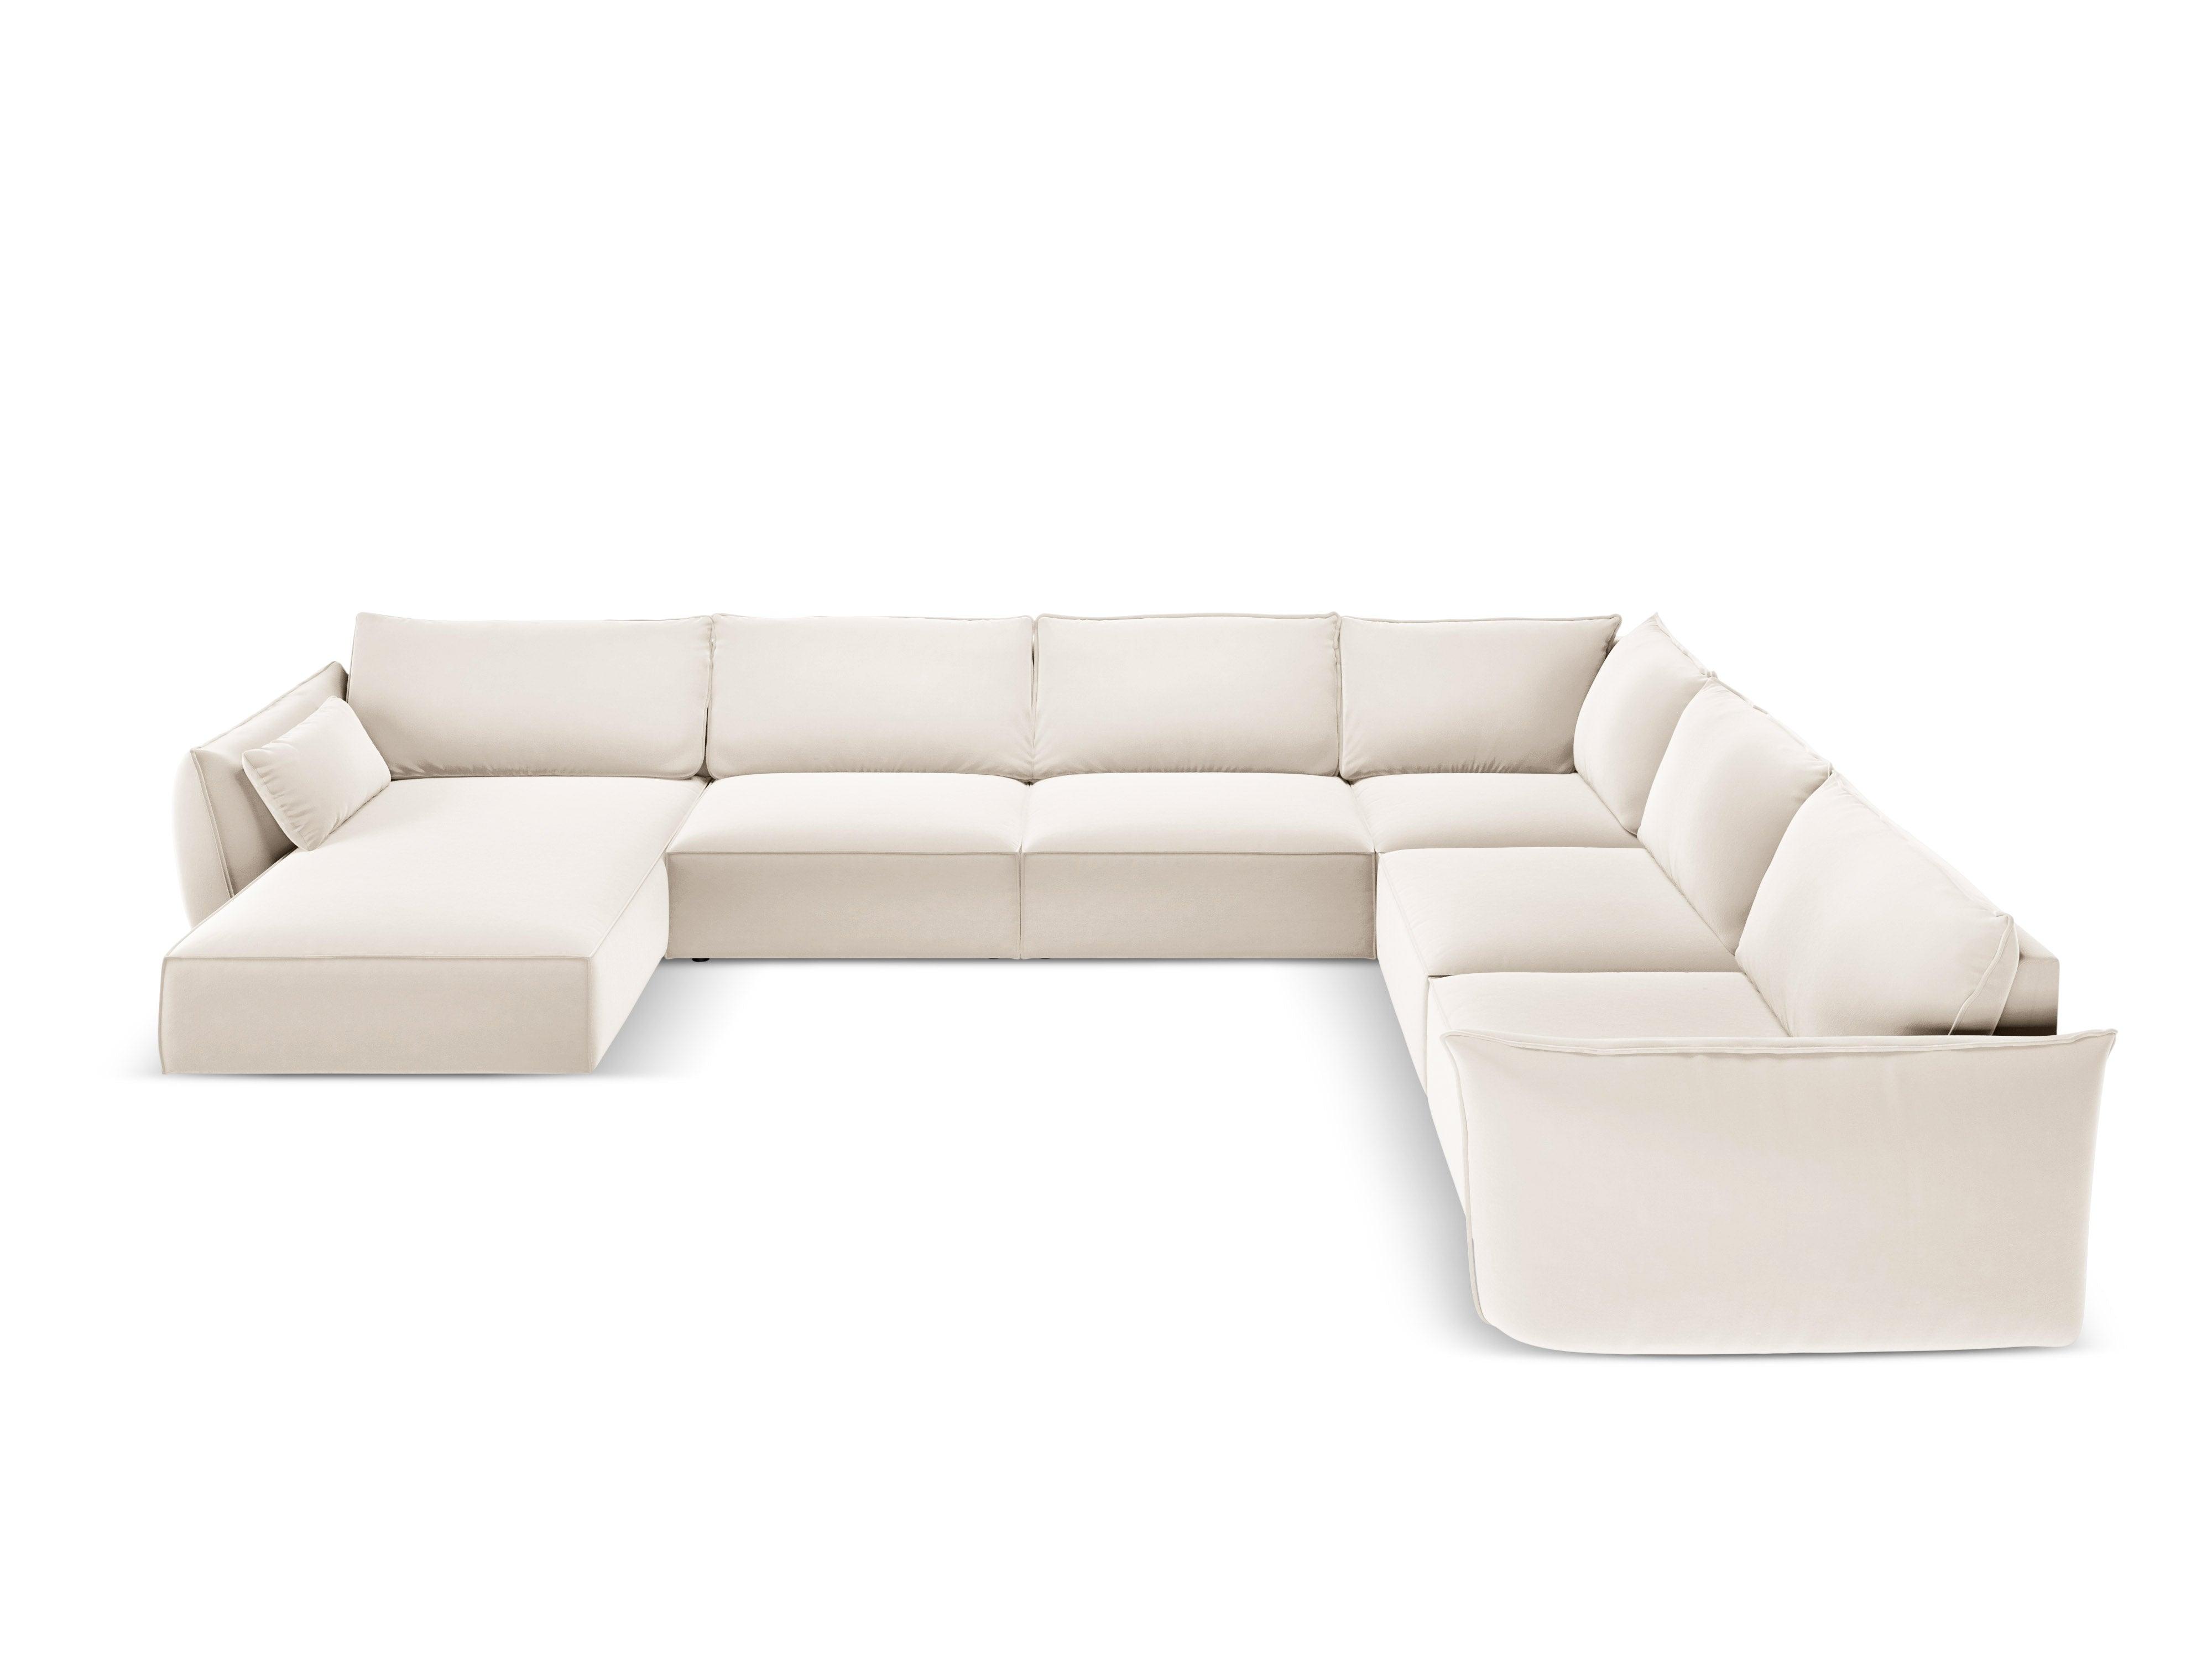 Velvet Panoramic Right Corner Sofa, "Vanda", 8 Seats, 384x284x85
Made in Europe, Mazzini Sofas, Eye on Design